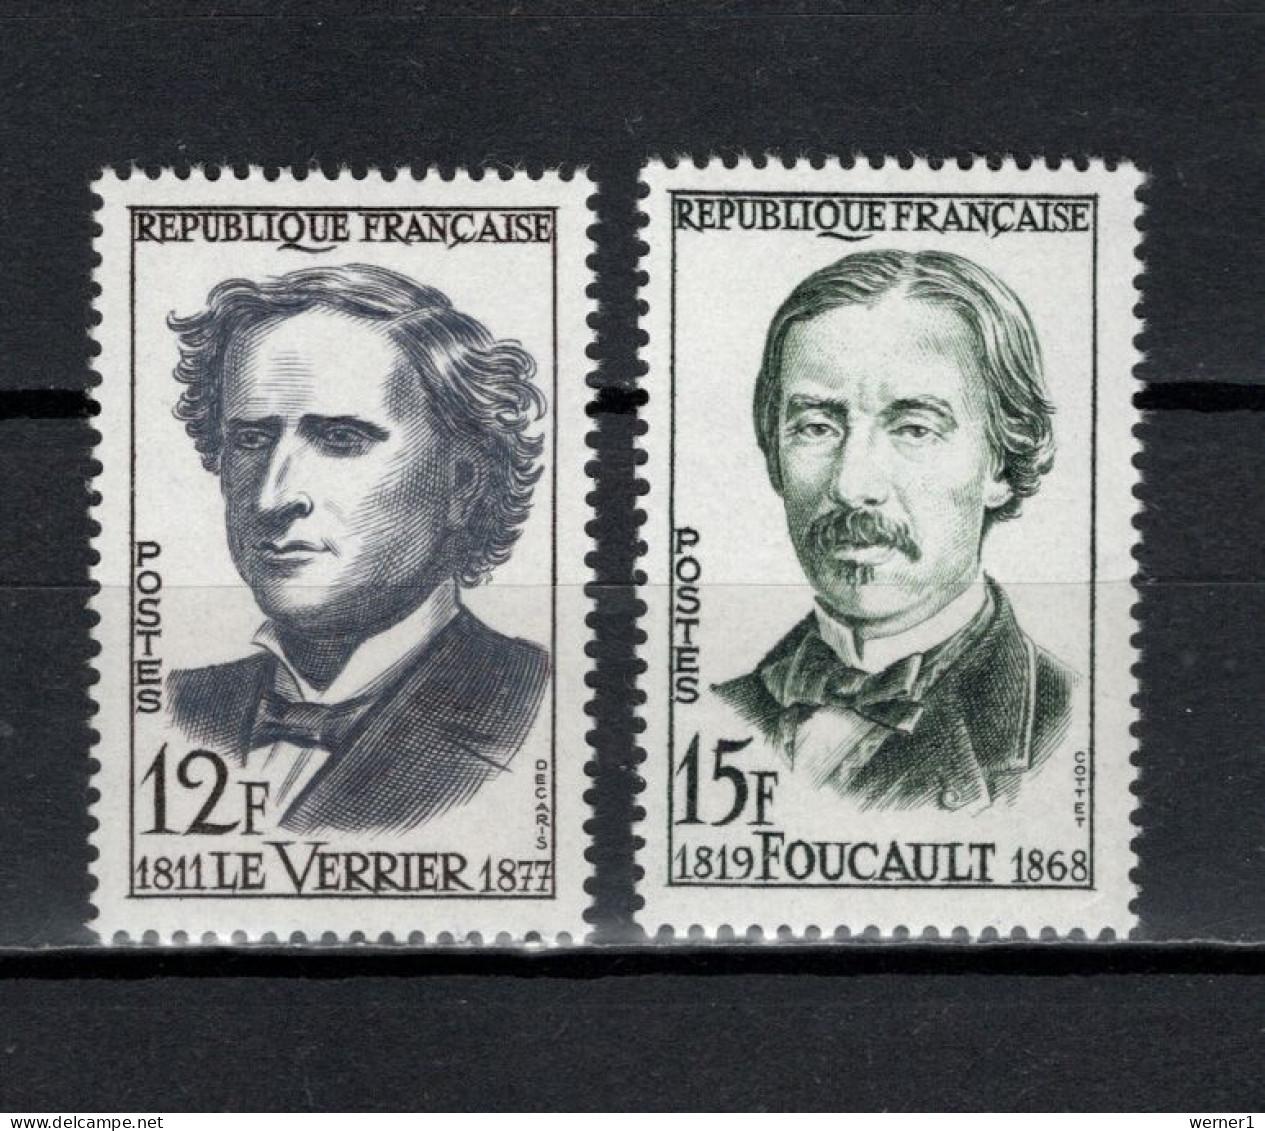 France 1958 Space, Le Verrier, Foucault 2 Stamps MNH - Europe